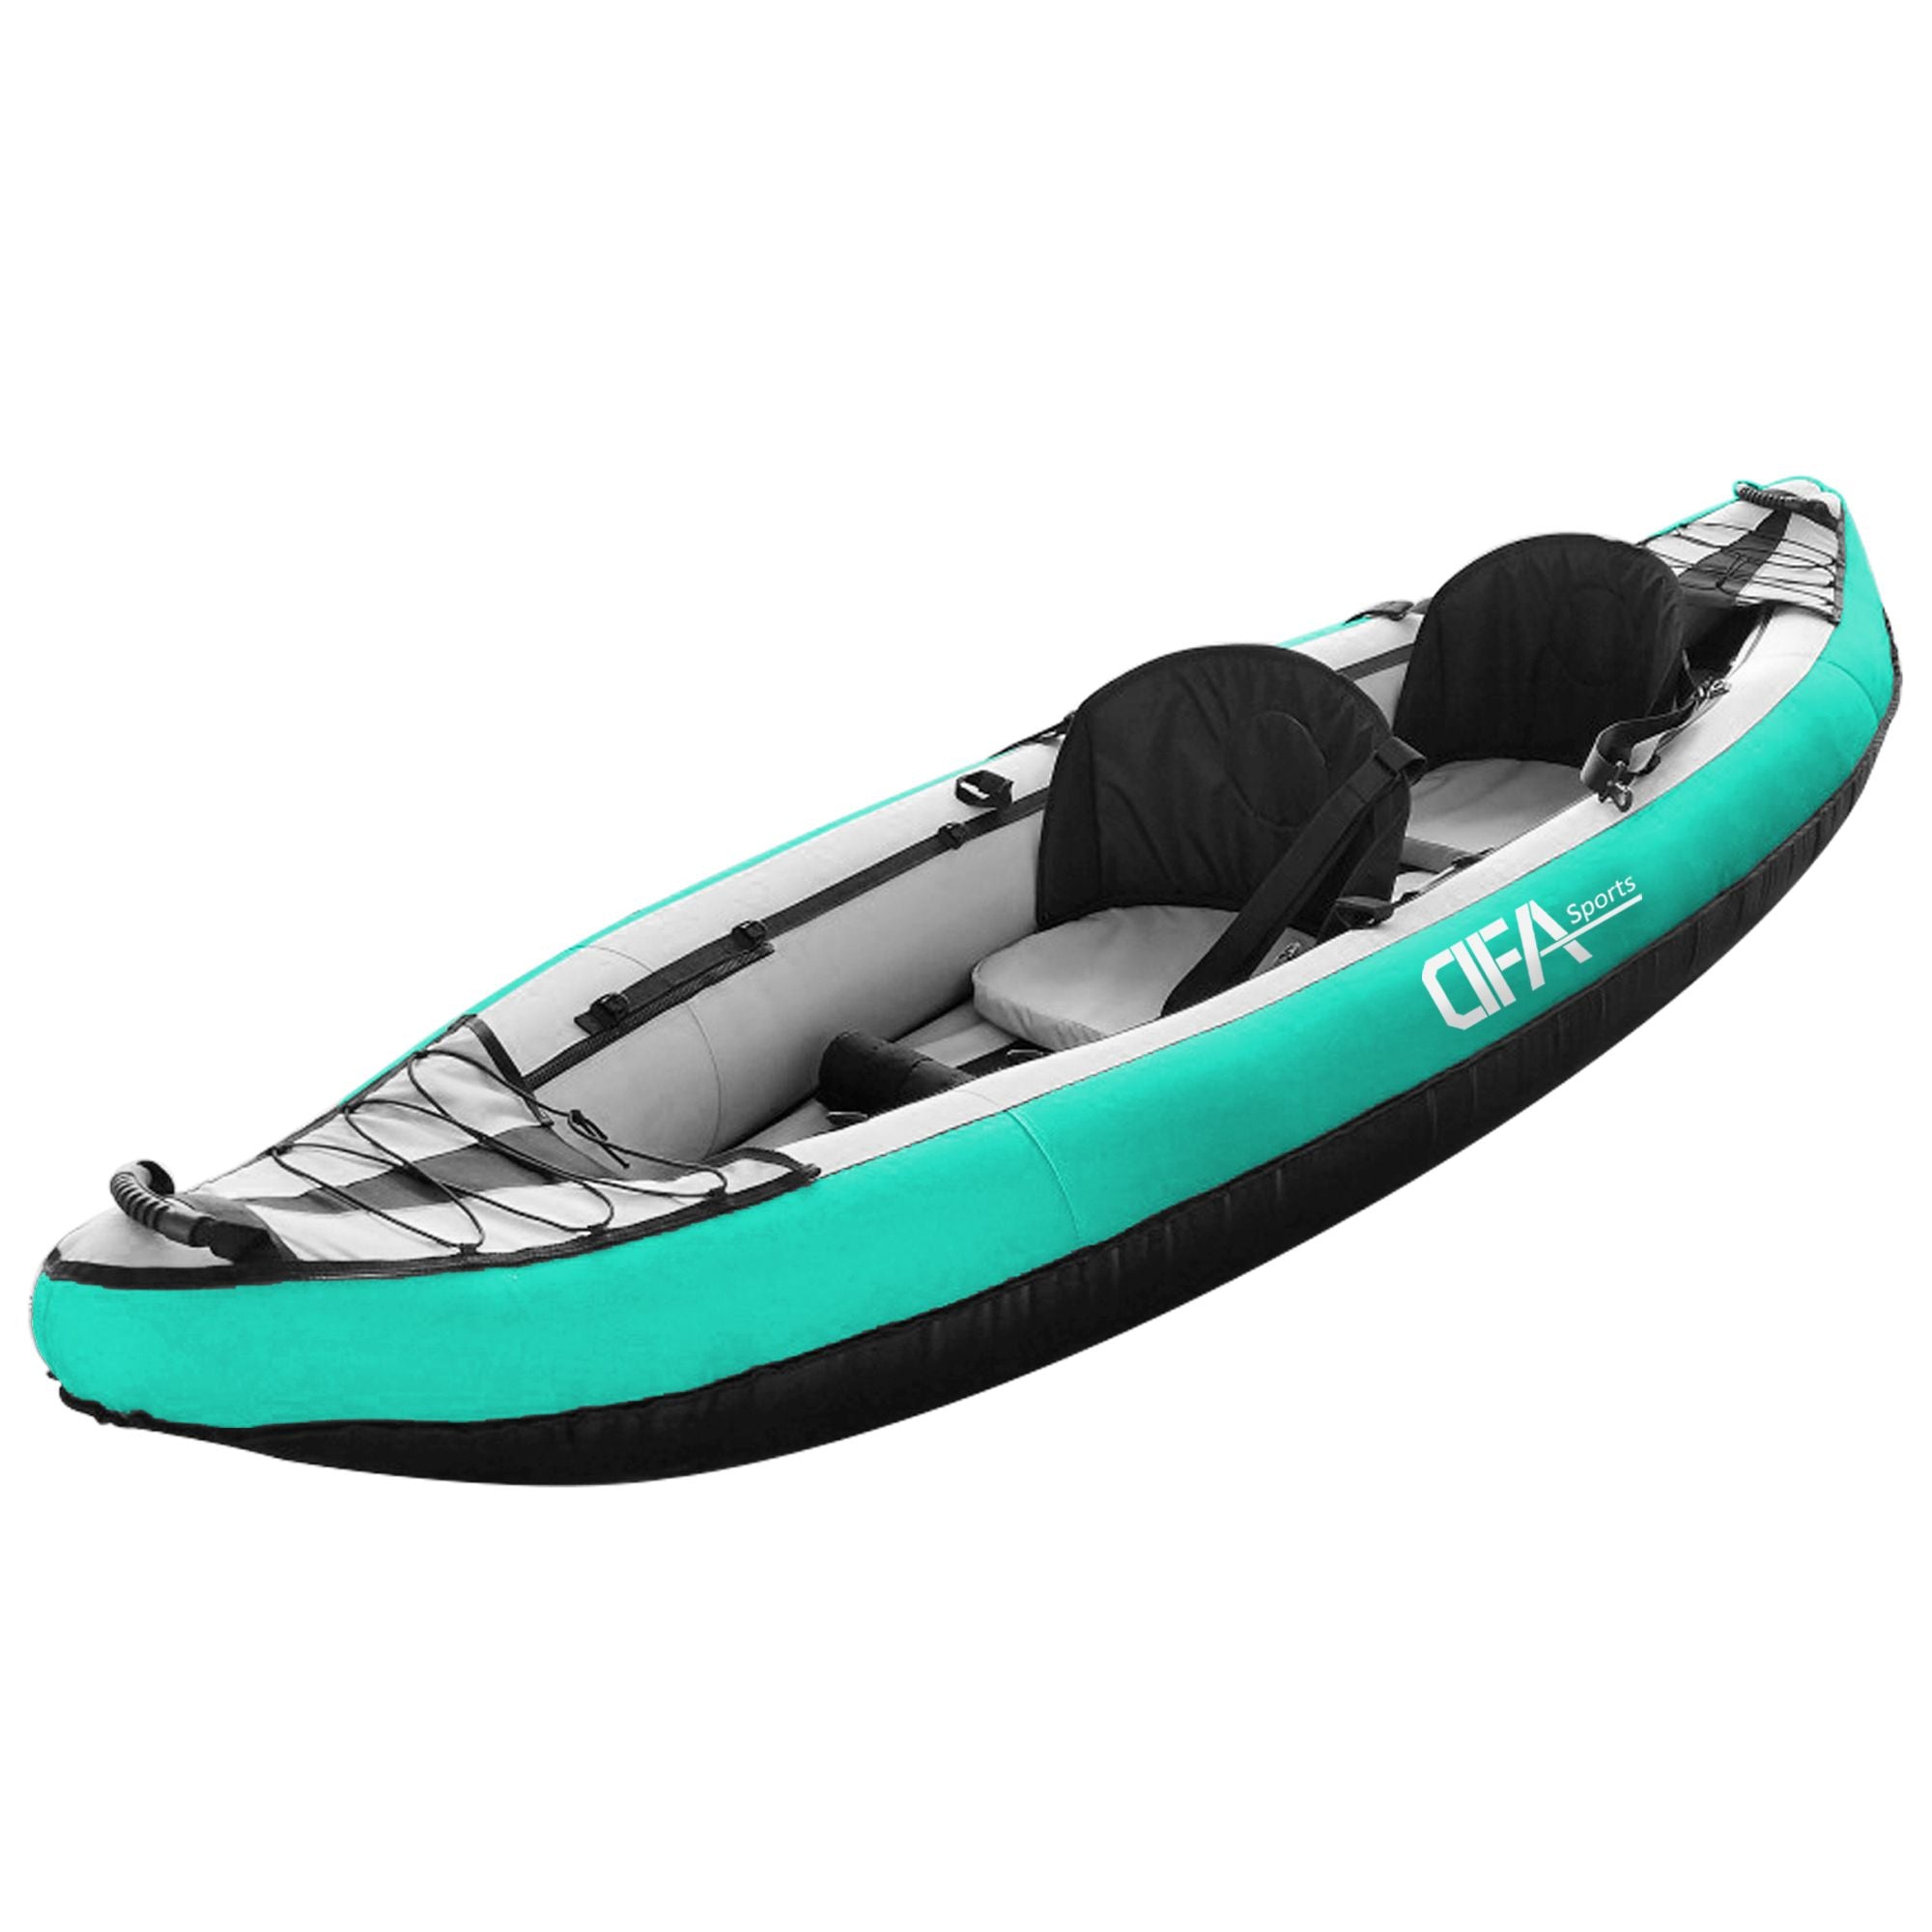 DFA Sports Colorado inflatable kayak package